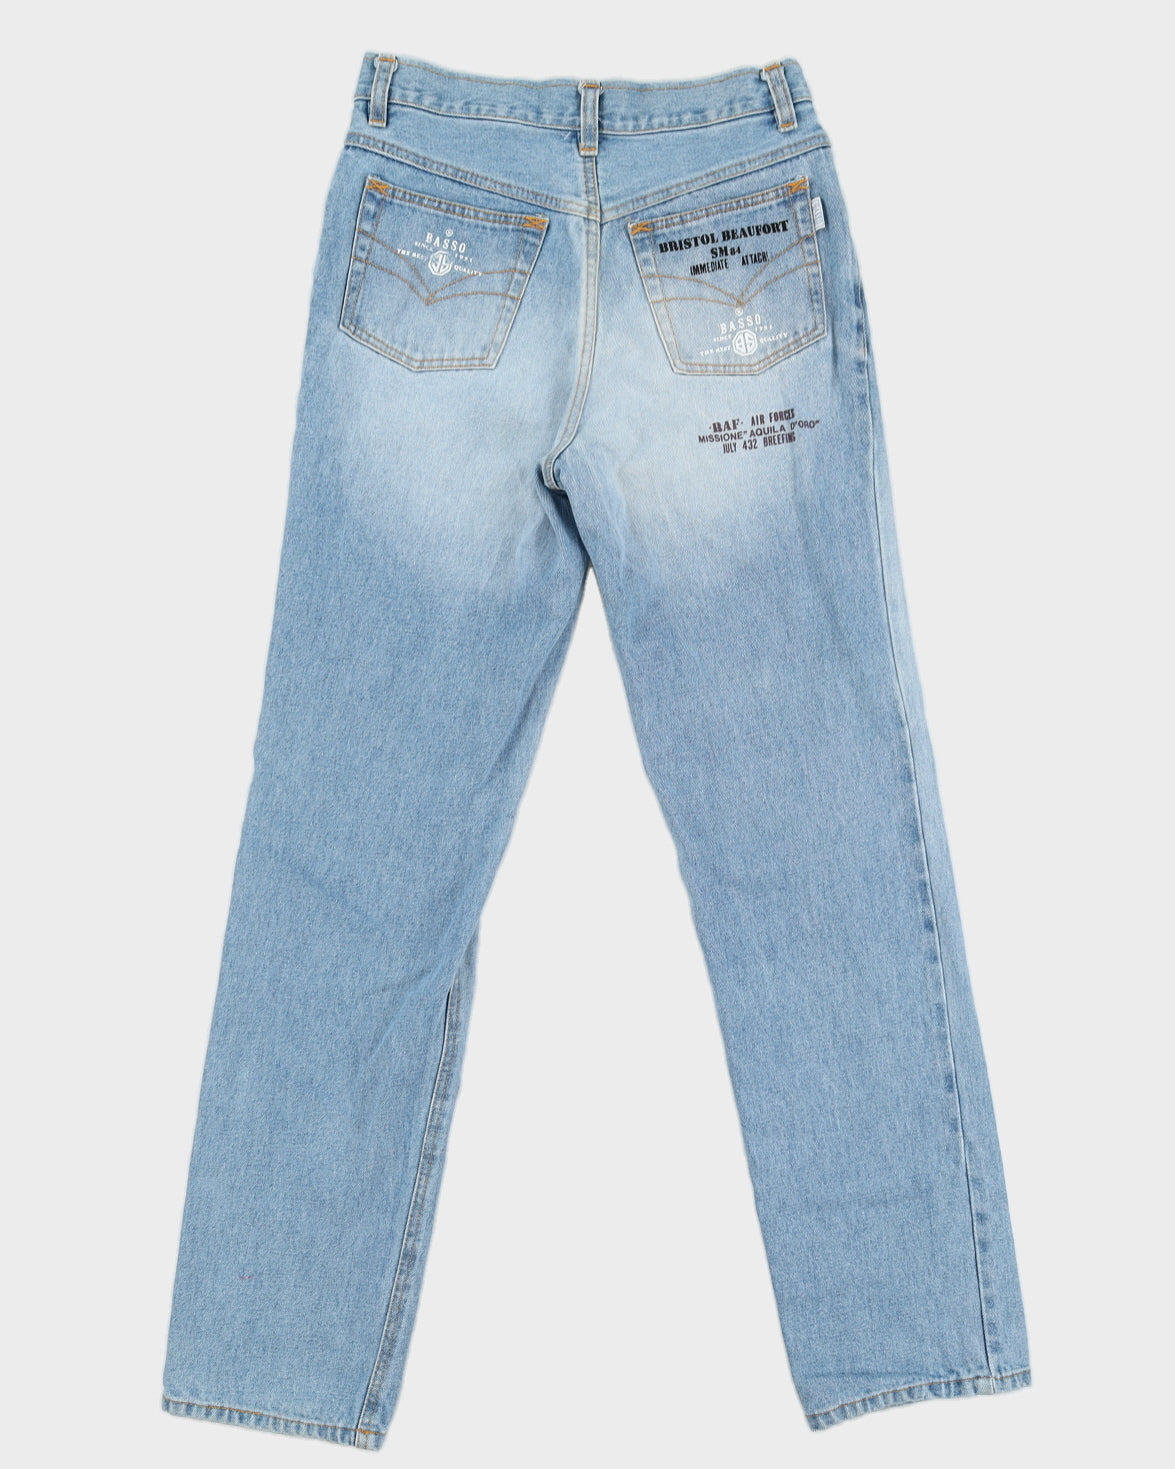 Vintage 90s Basso Light Wash Denim Jeans - W31